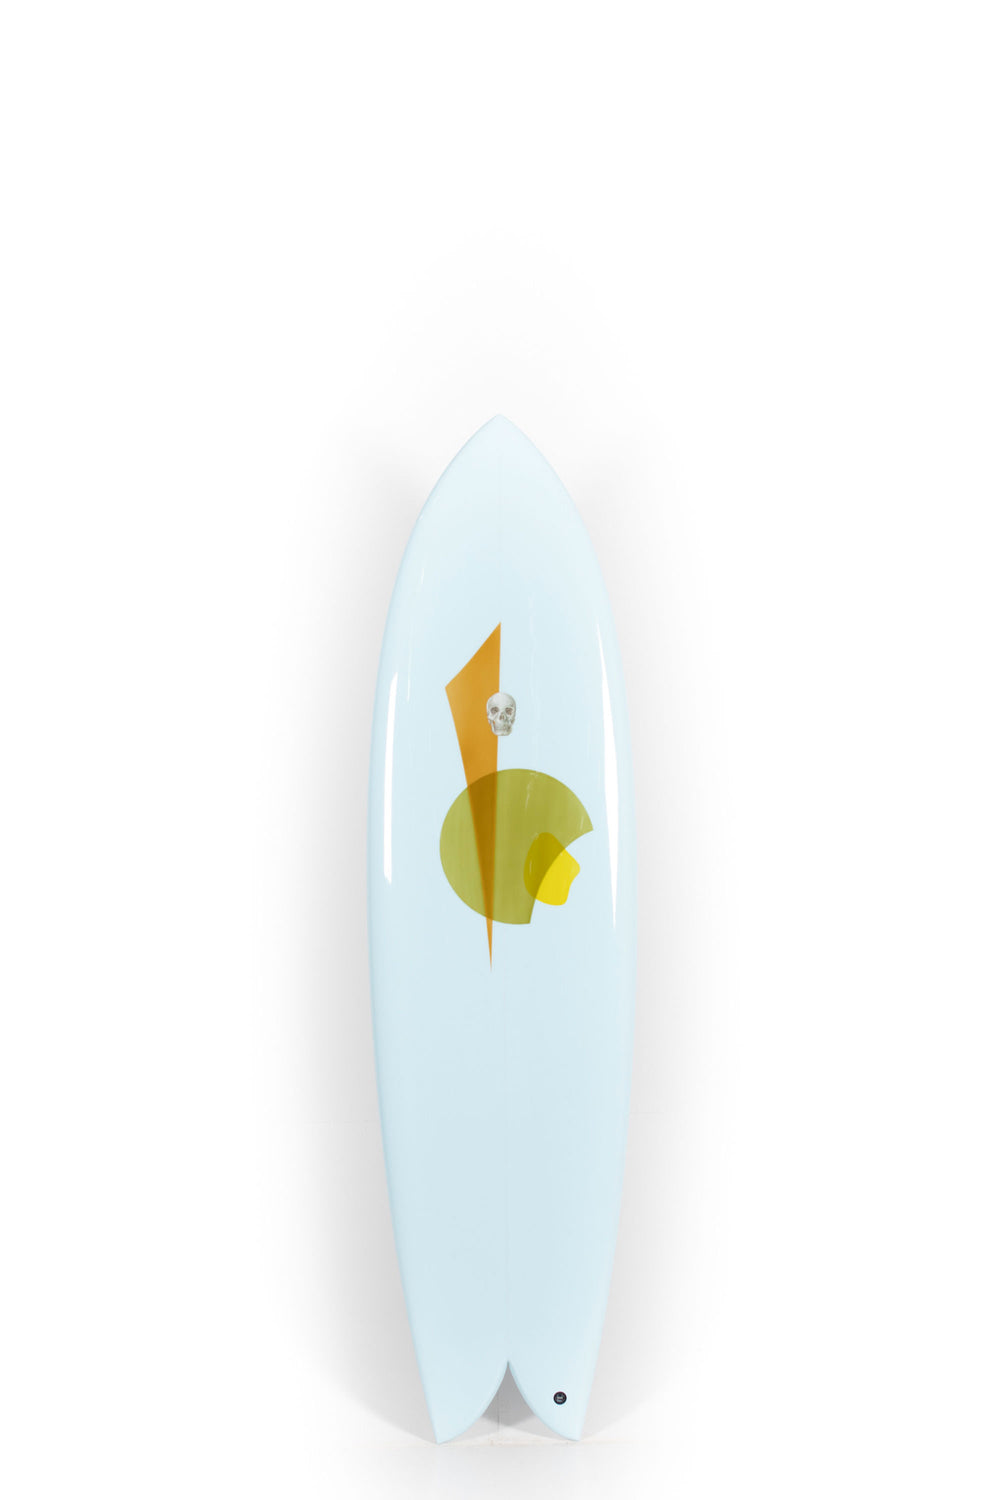 Pukas Surf Shop - Christenson Surfboards - LONG PHISH - 6'8